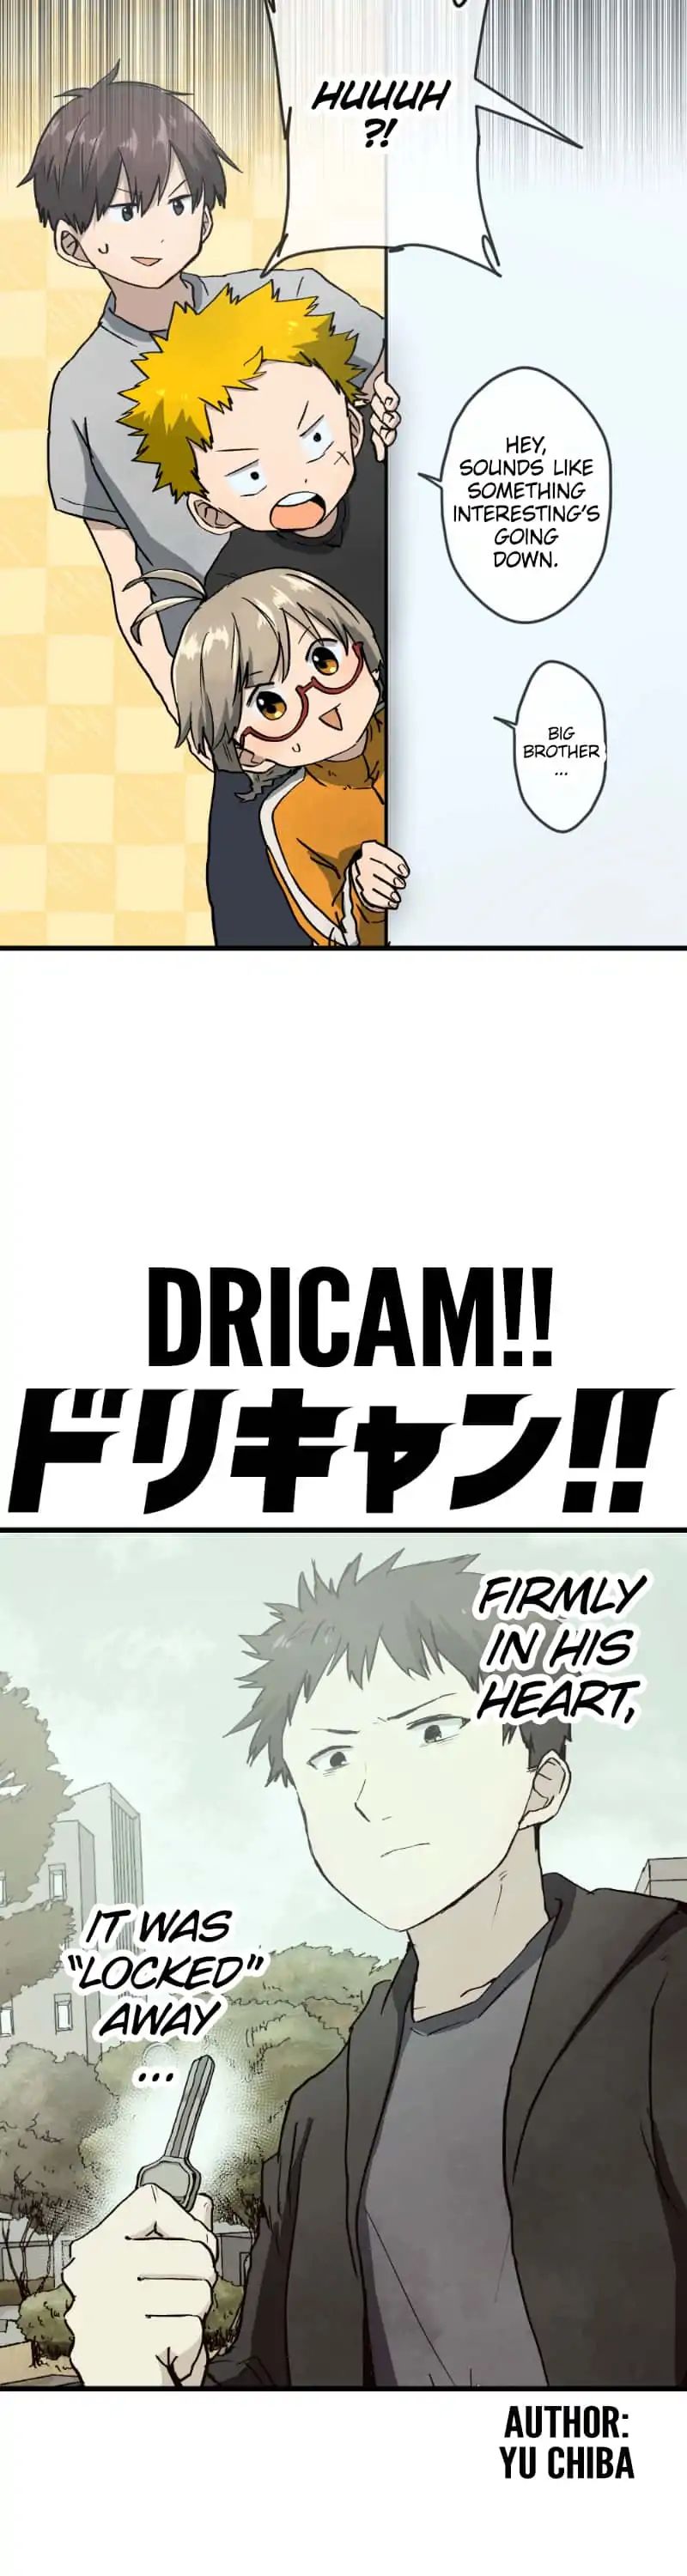 Dricam!! Chapter 51: Decision